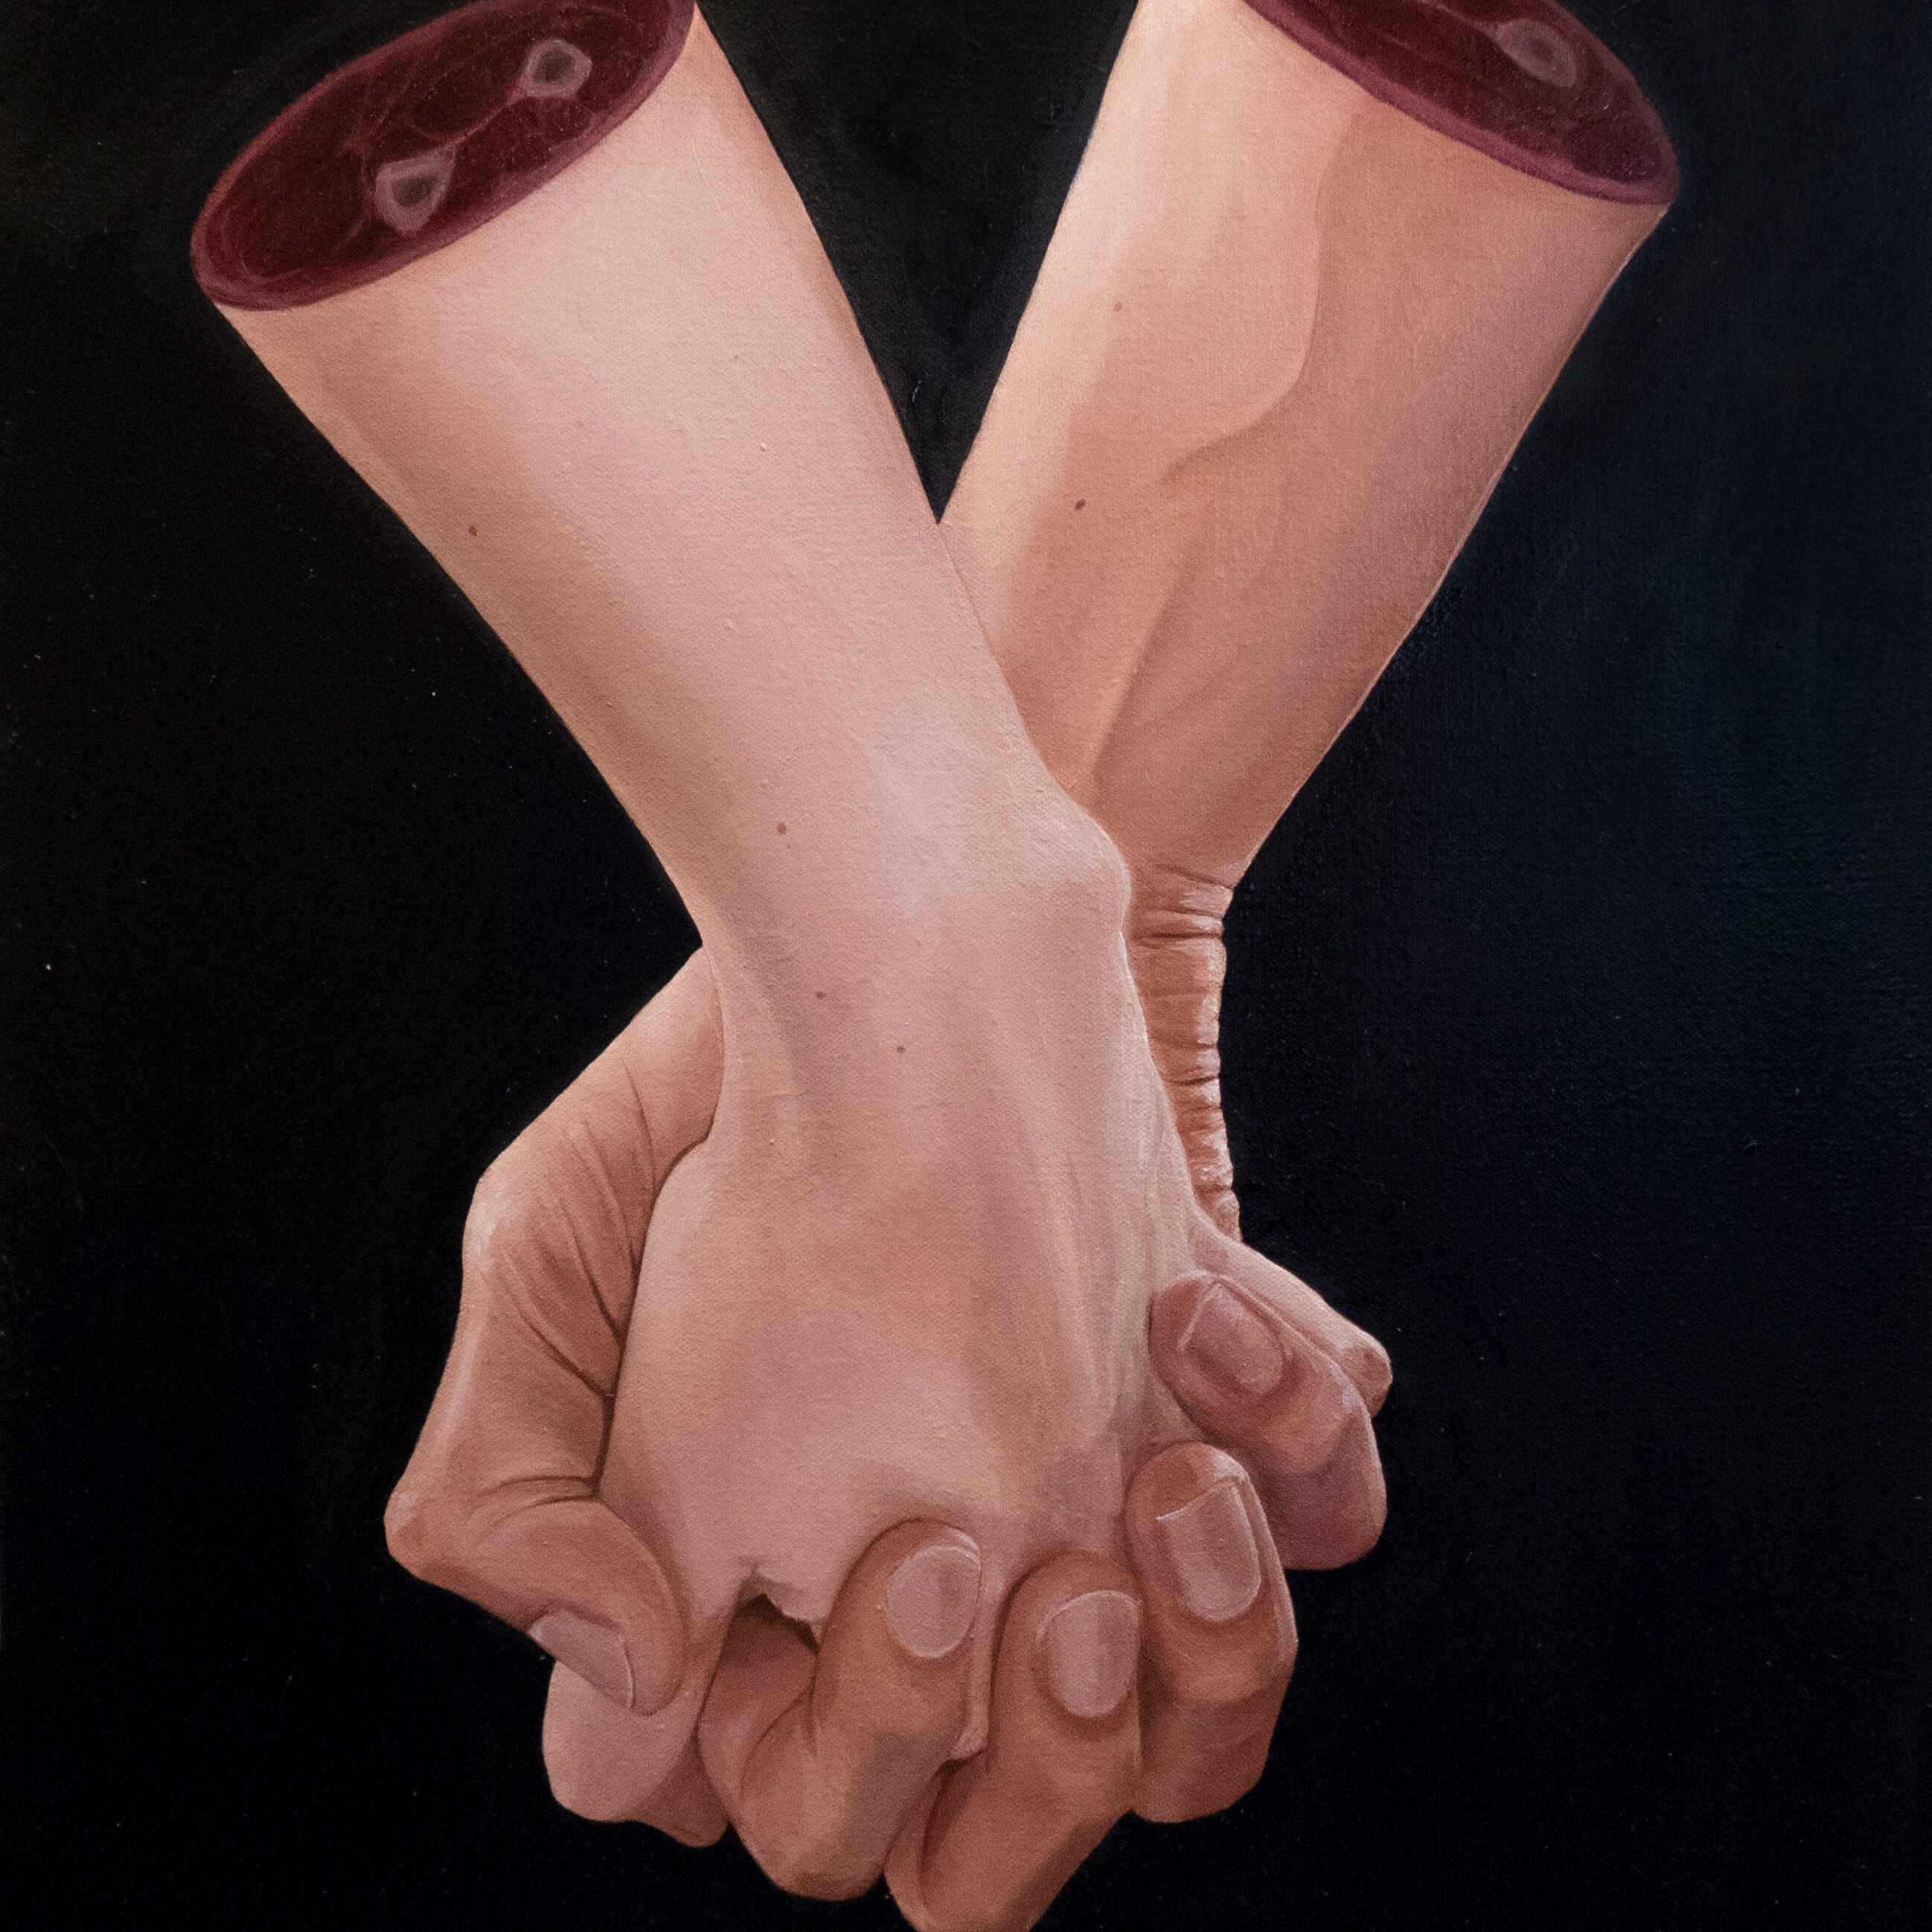 Lucy Maddox - Alone (2020) - 50x61cm - oil on canvas